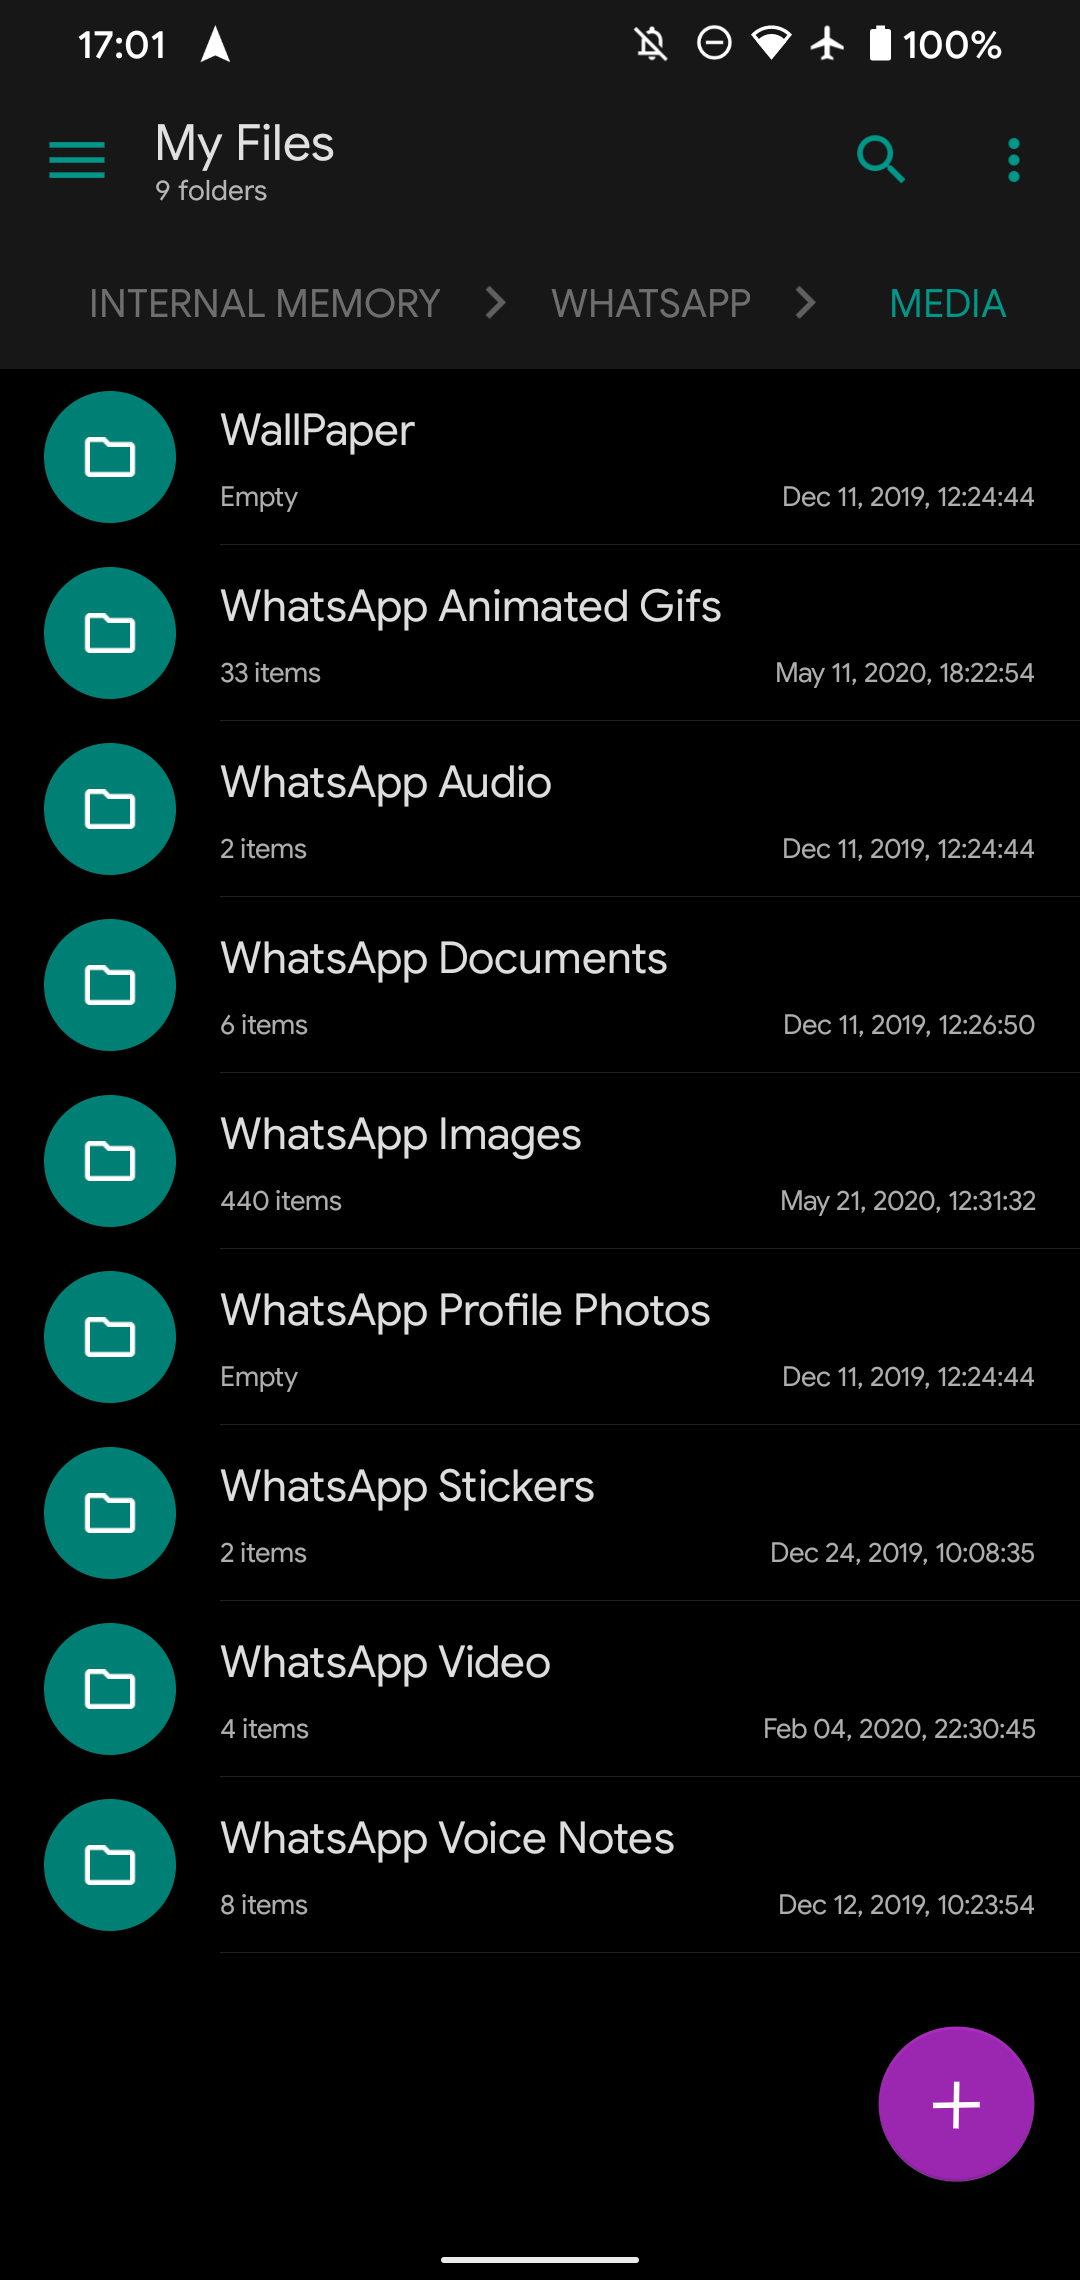 WhatsApp Image Folders Android